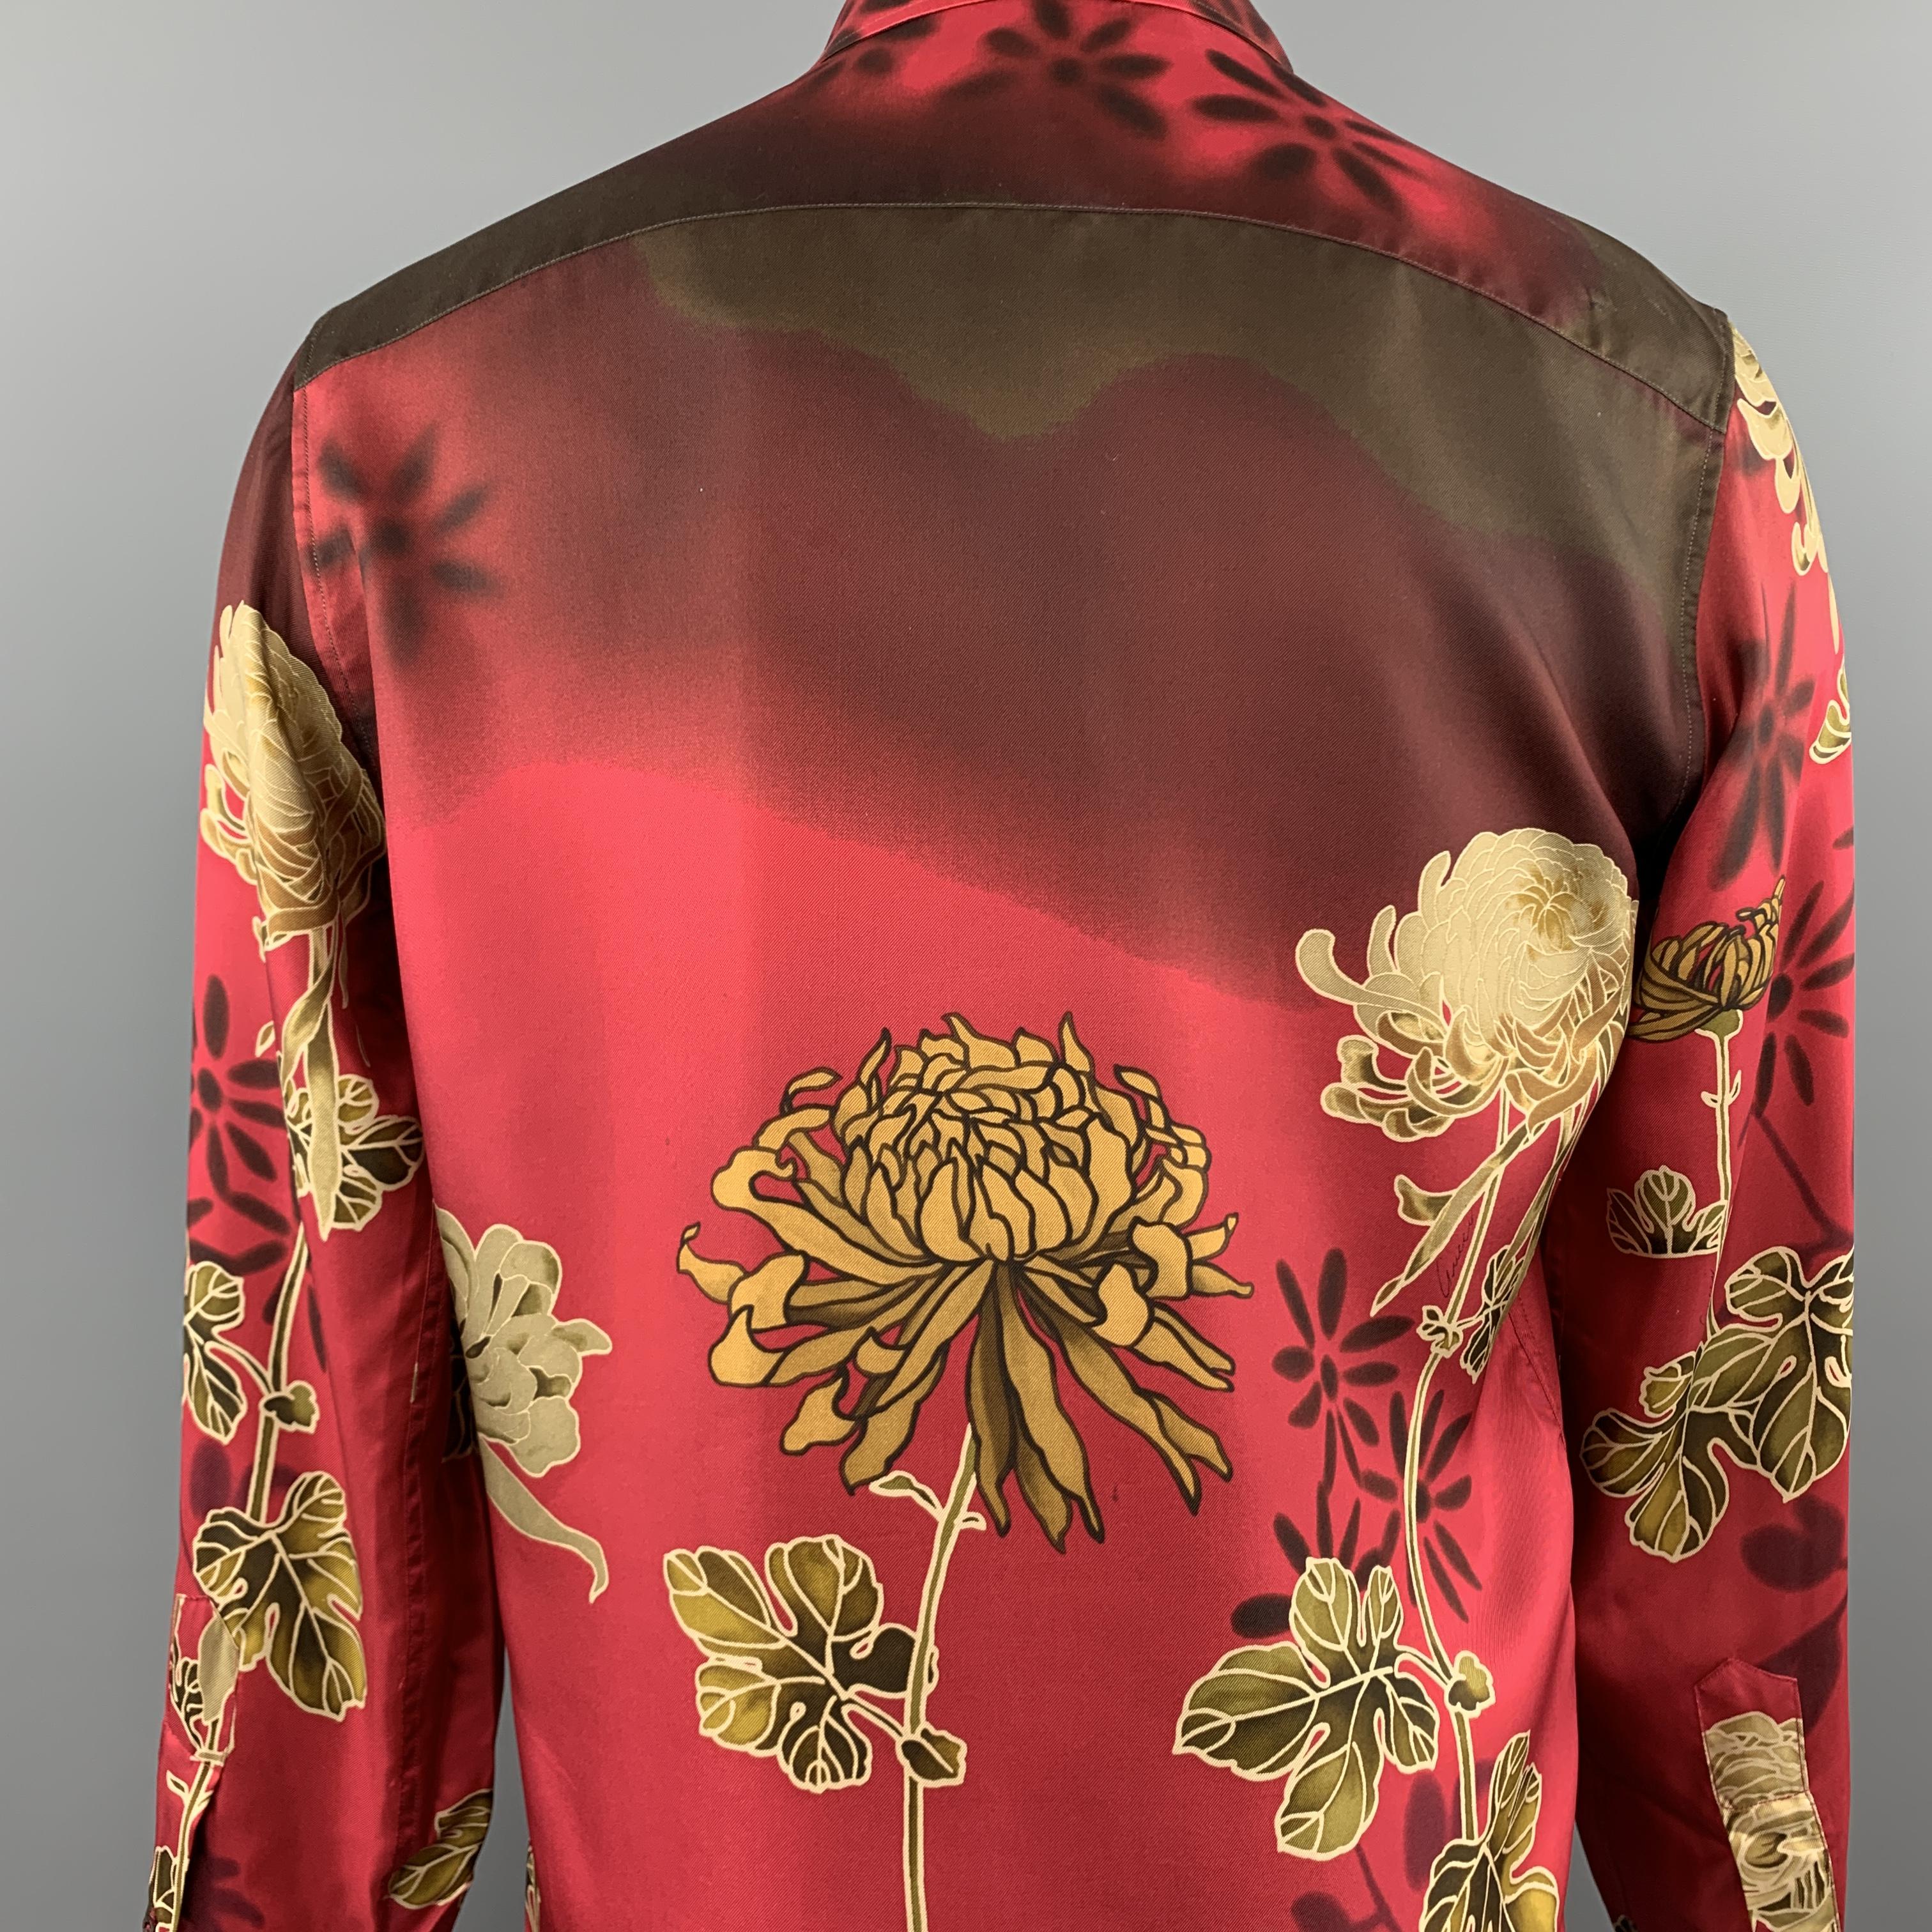  GUCCI by TOM FORD M Burgundy Floral Silk French Cuff Long Sleeve Shirt 2